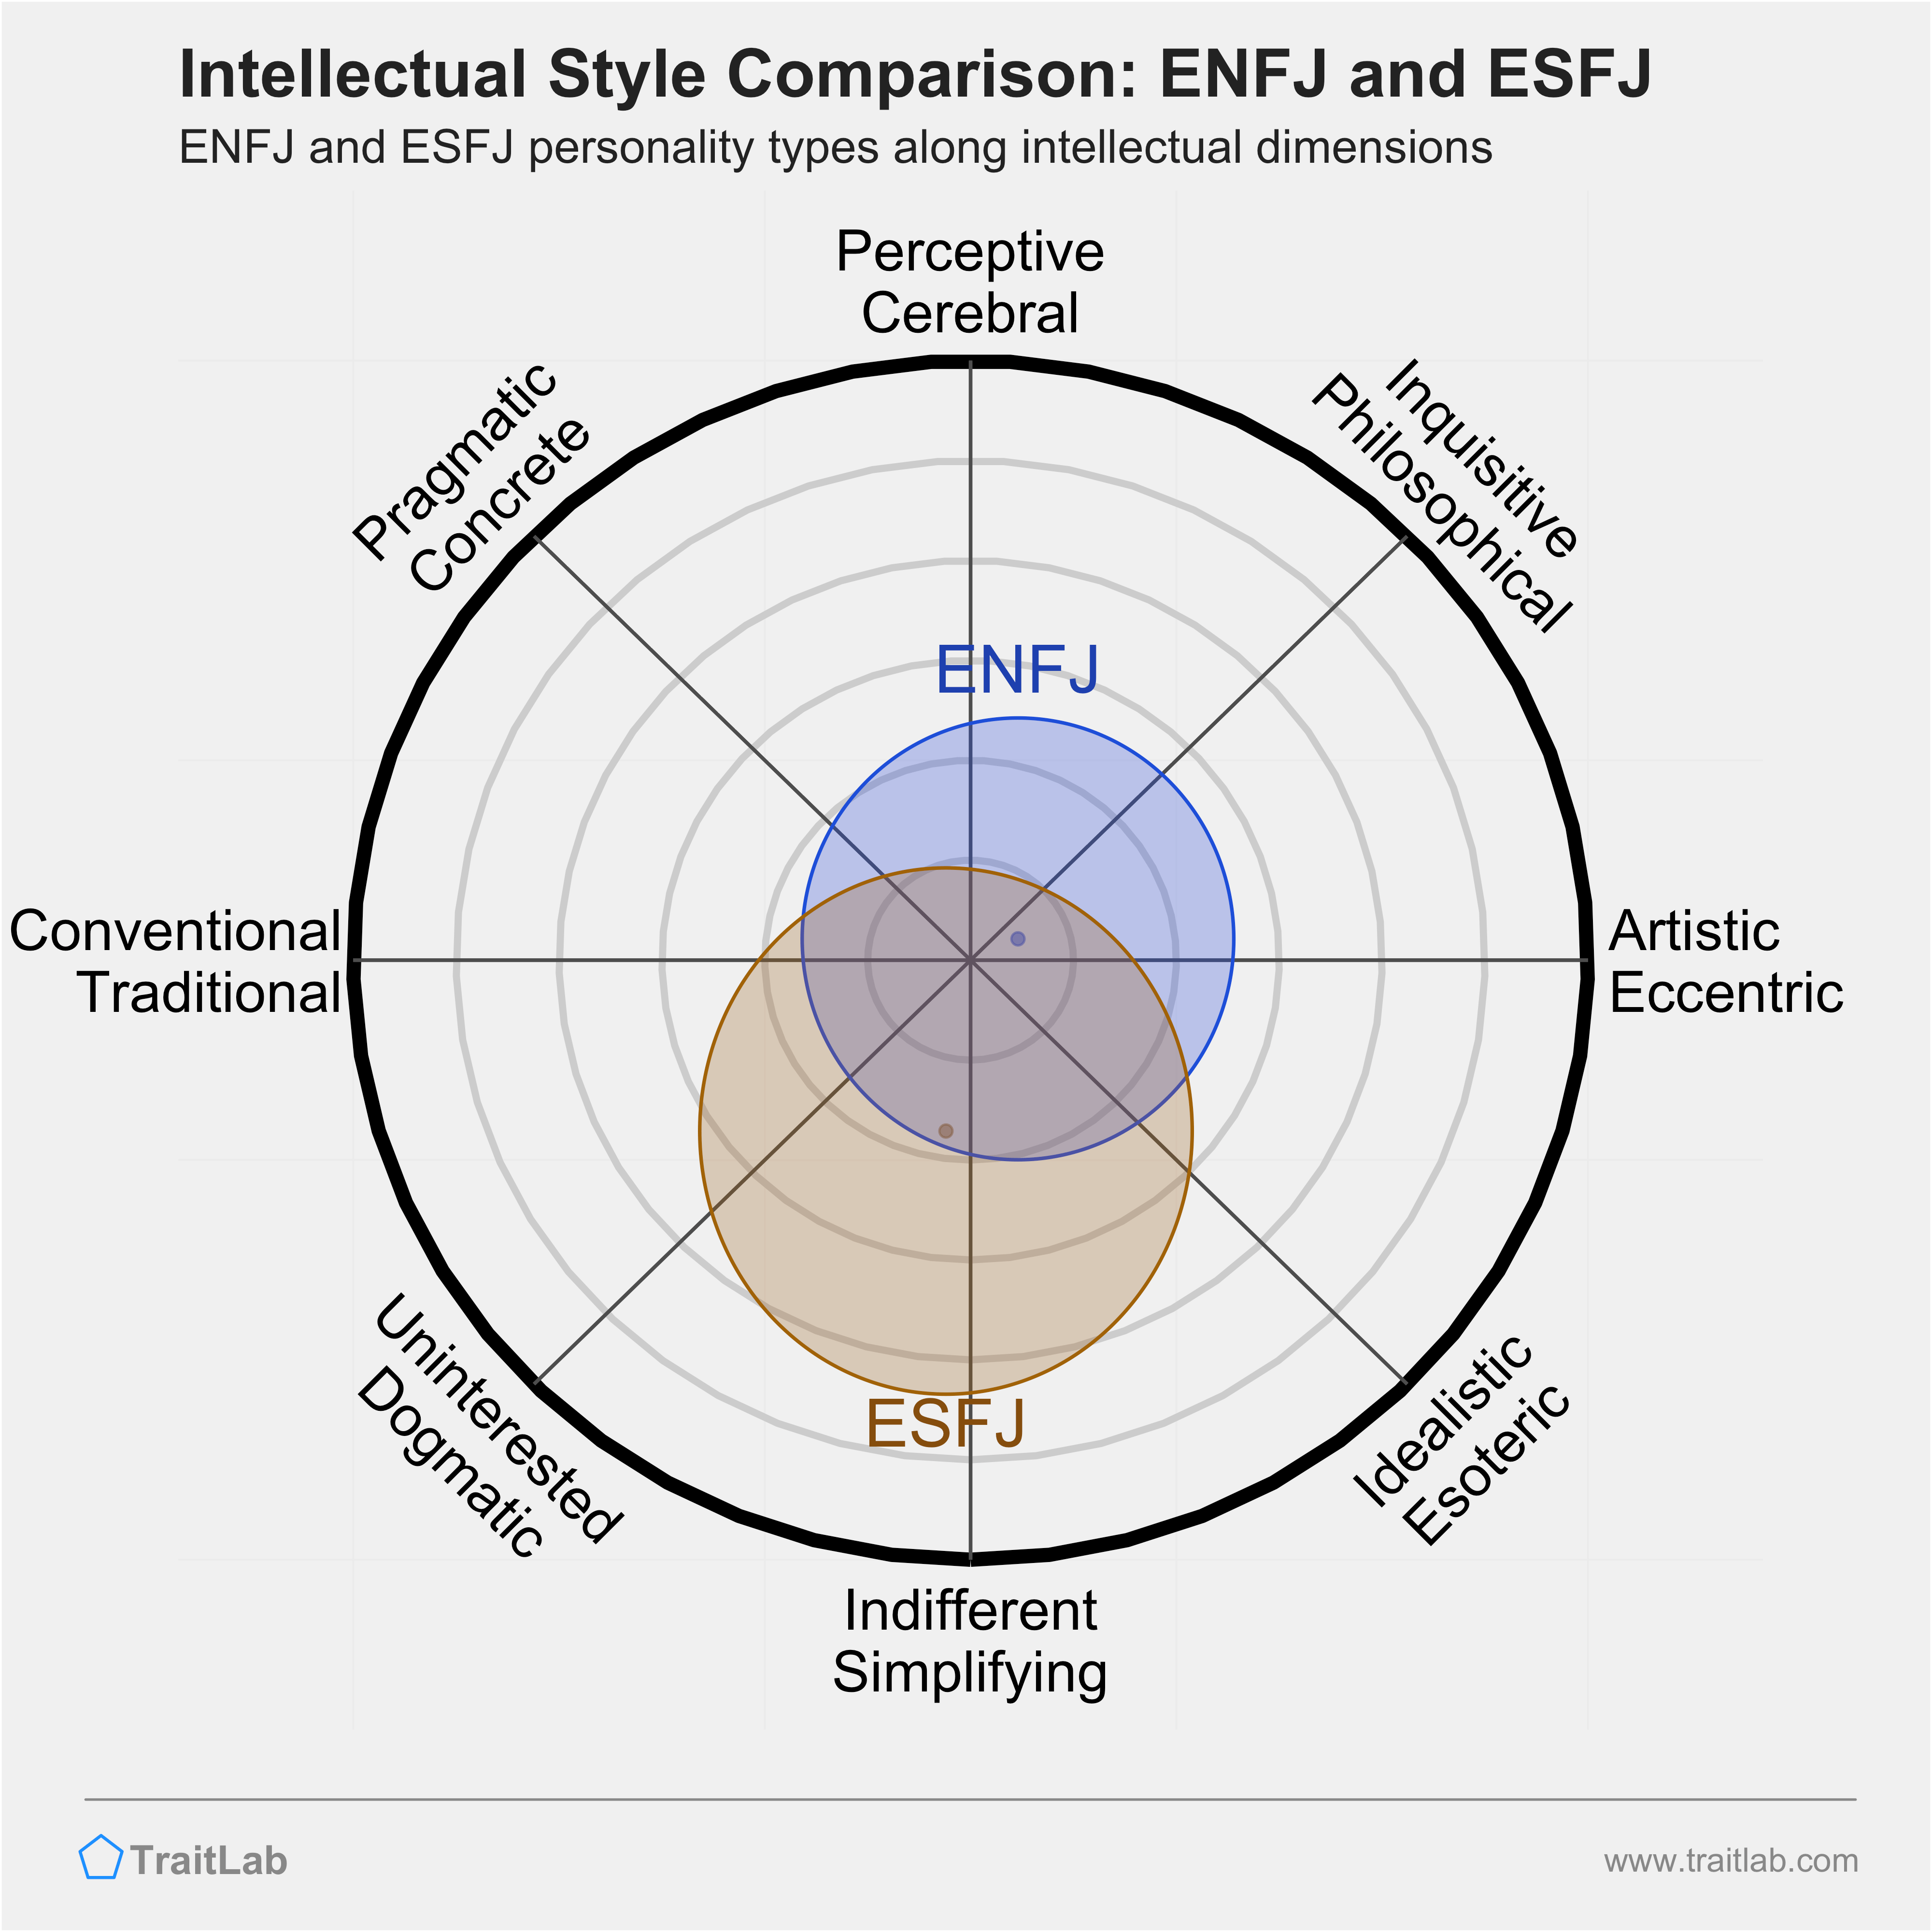 ENFJ and ESFJ comparison across intellectual dimensions